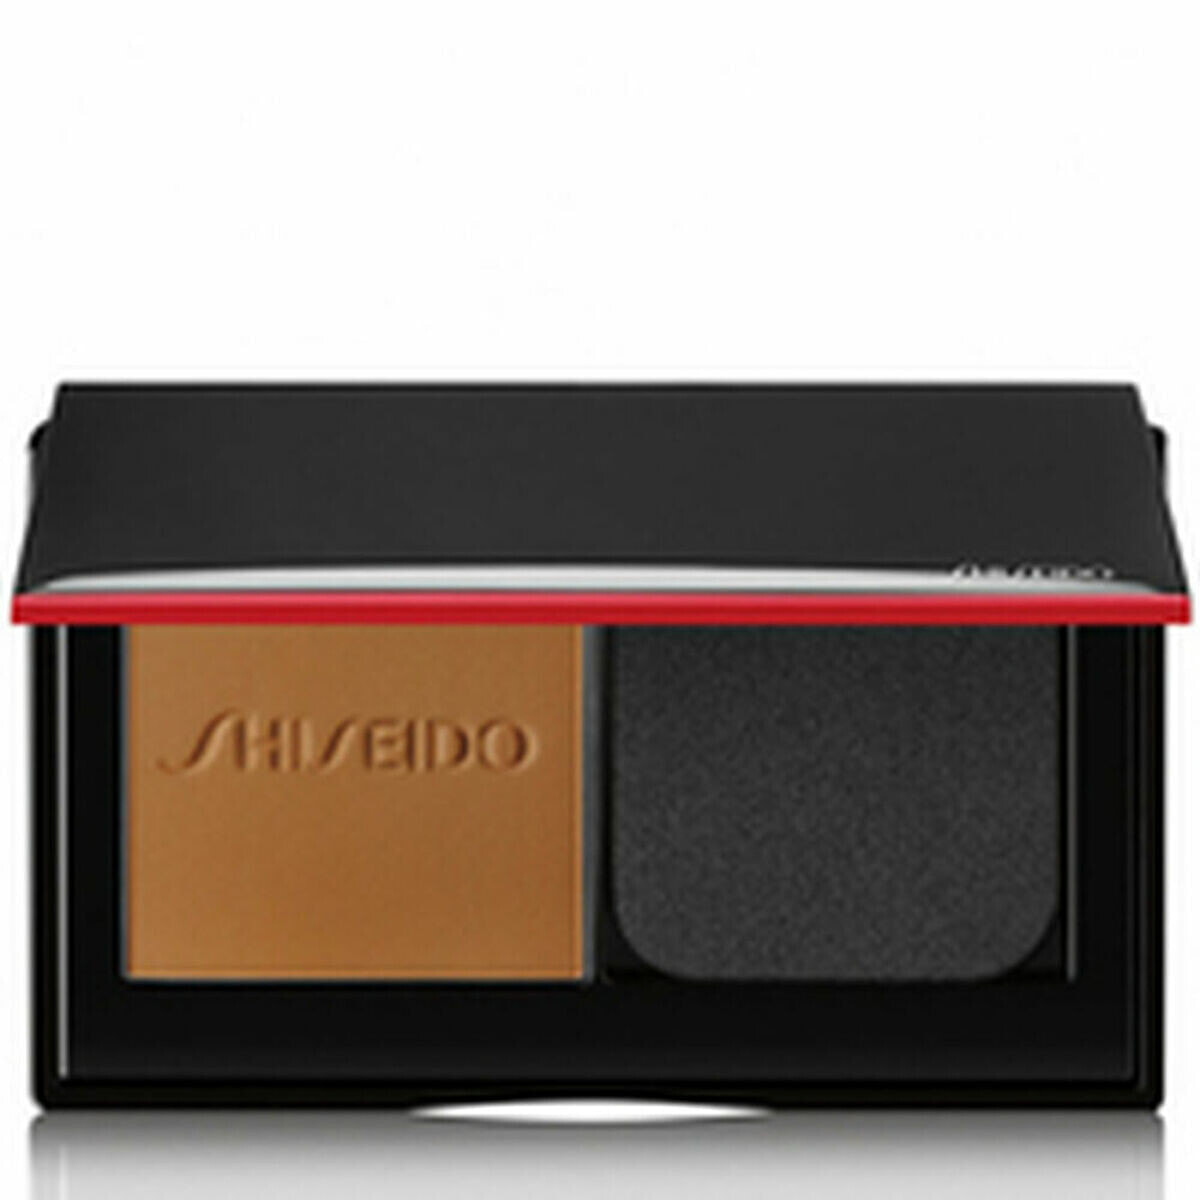 Powder Make-up Base Shiseido 729238161252